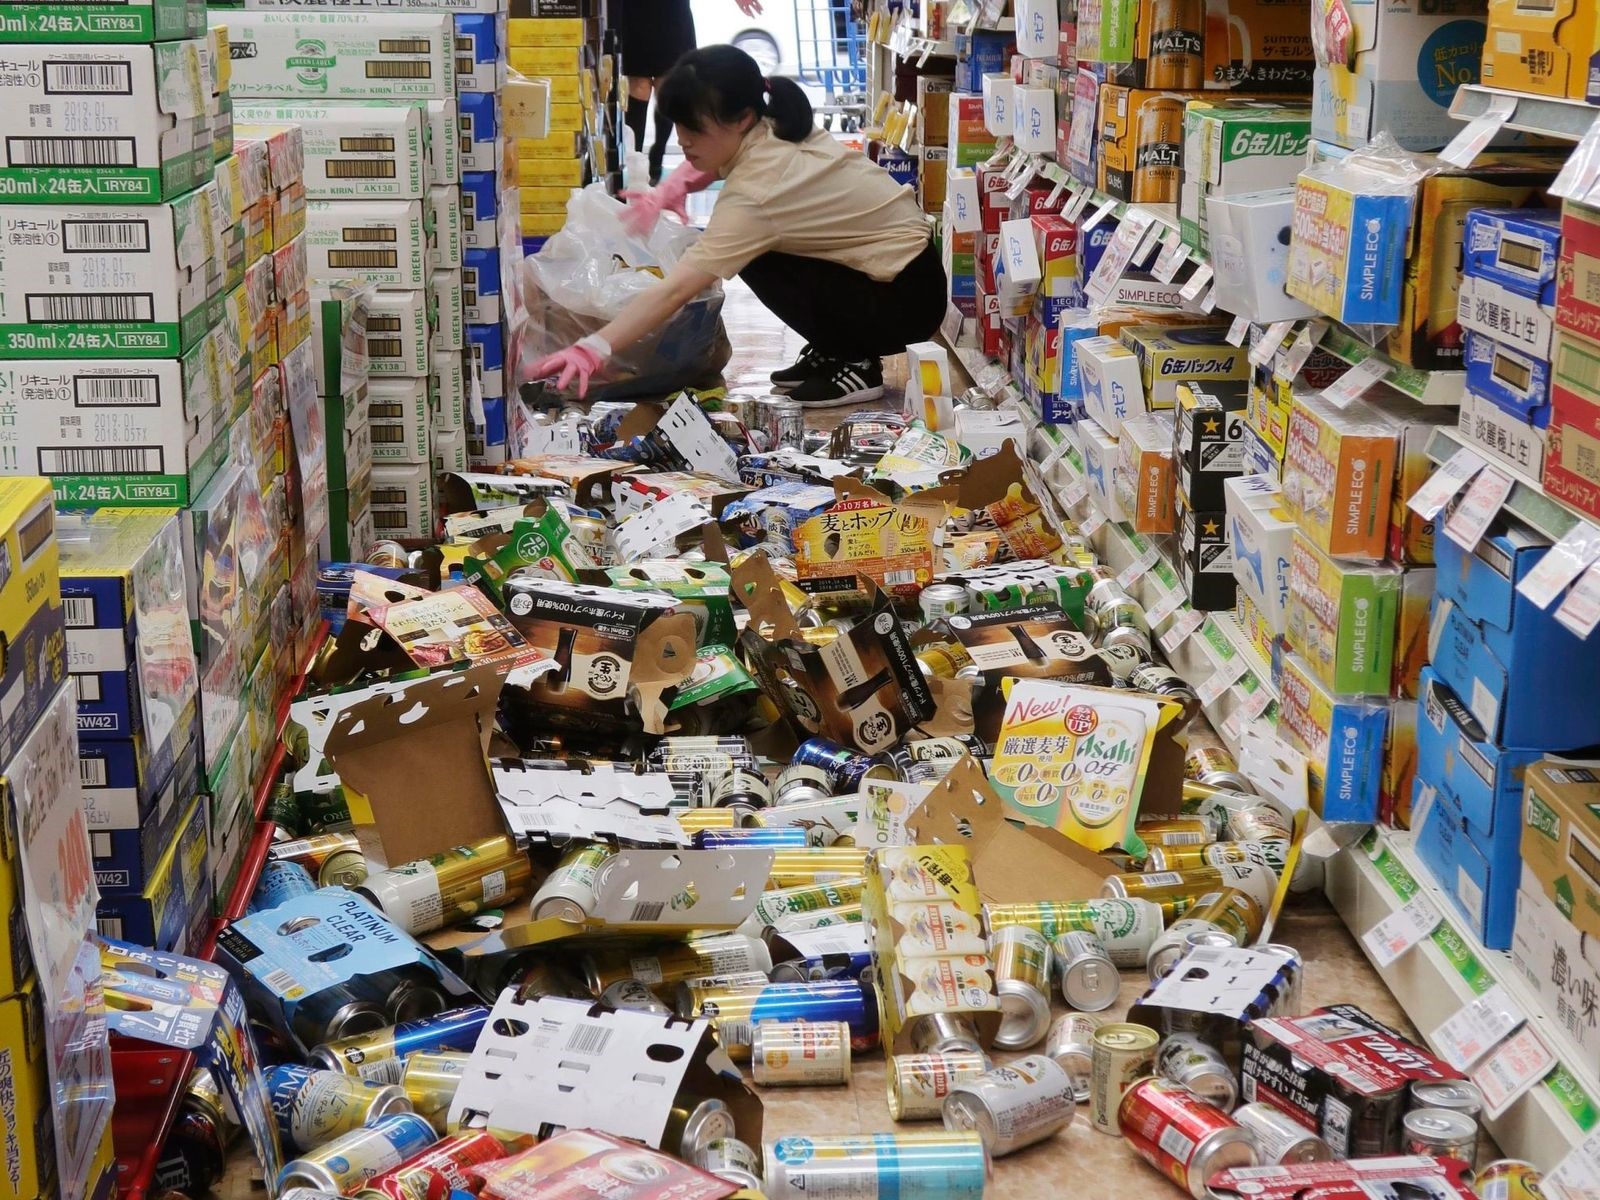 فیلم | لحظه هولناک شروع زلزله در ژاپن